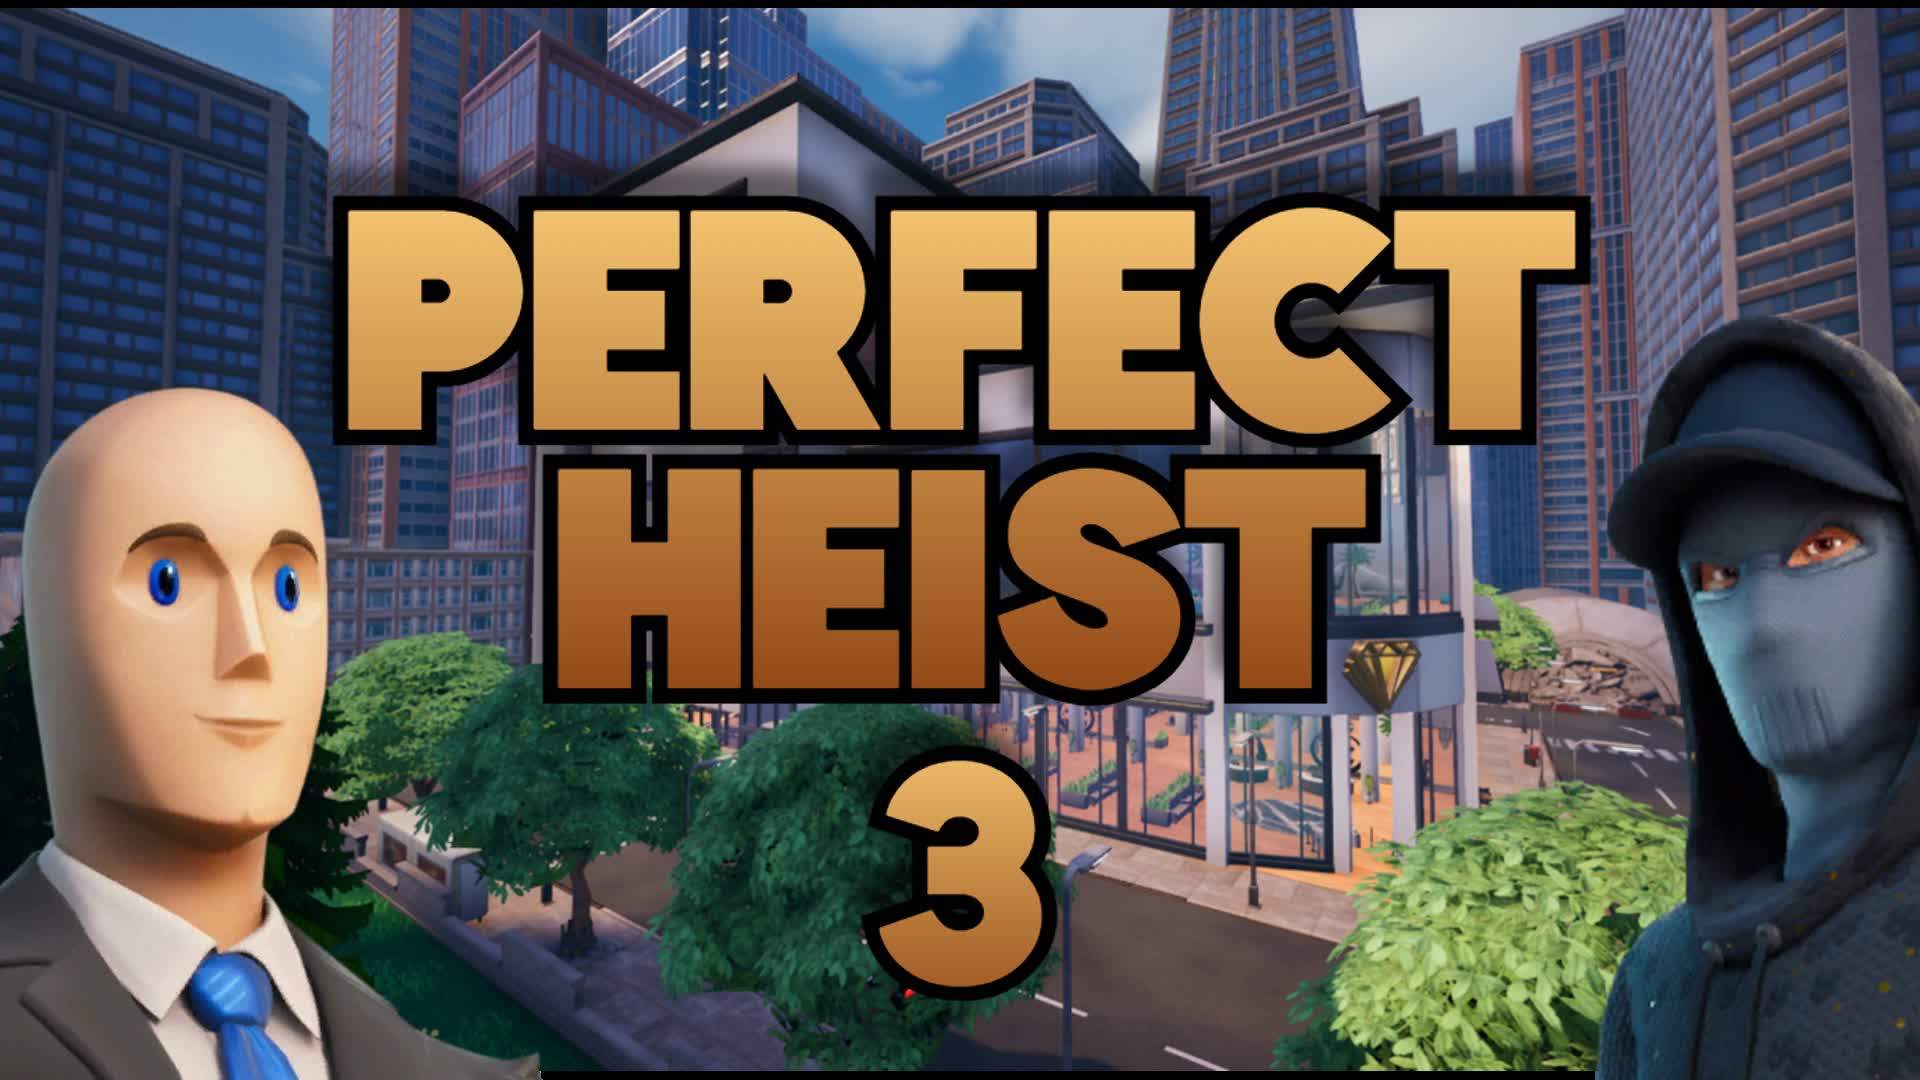 PERFECT HEIST 3